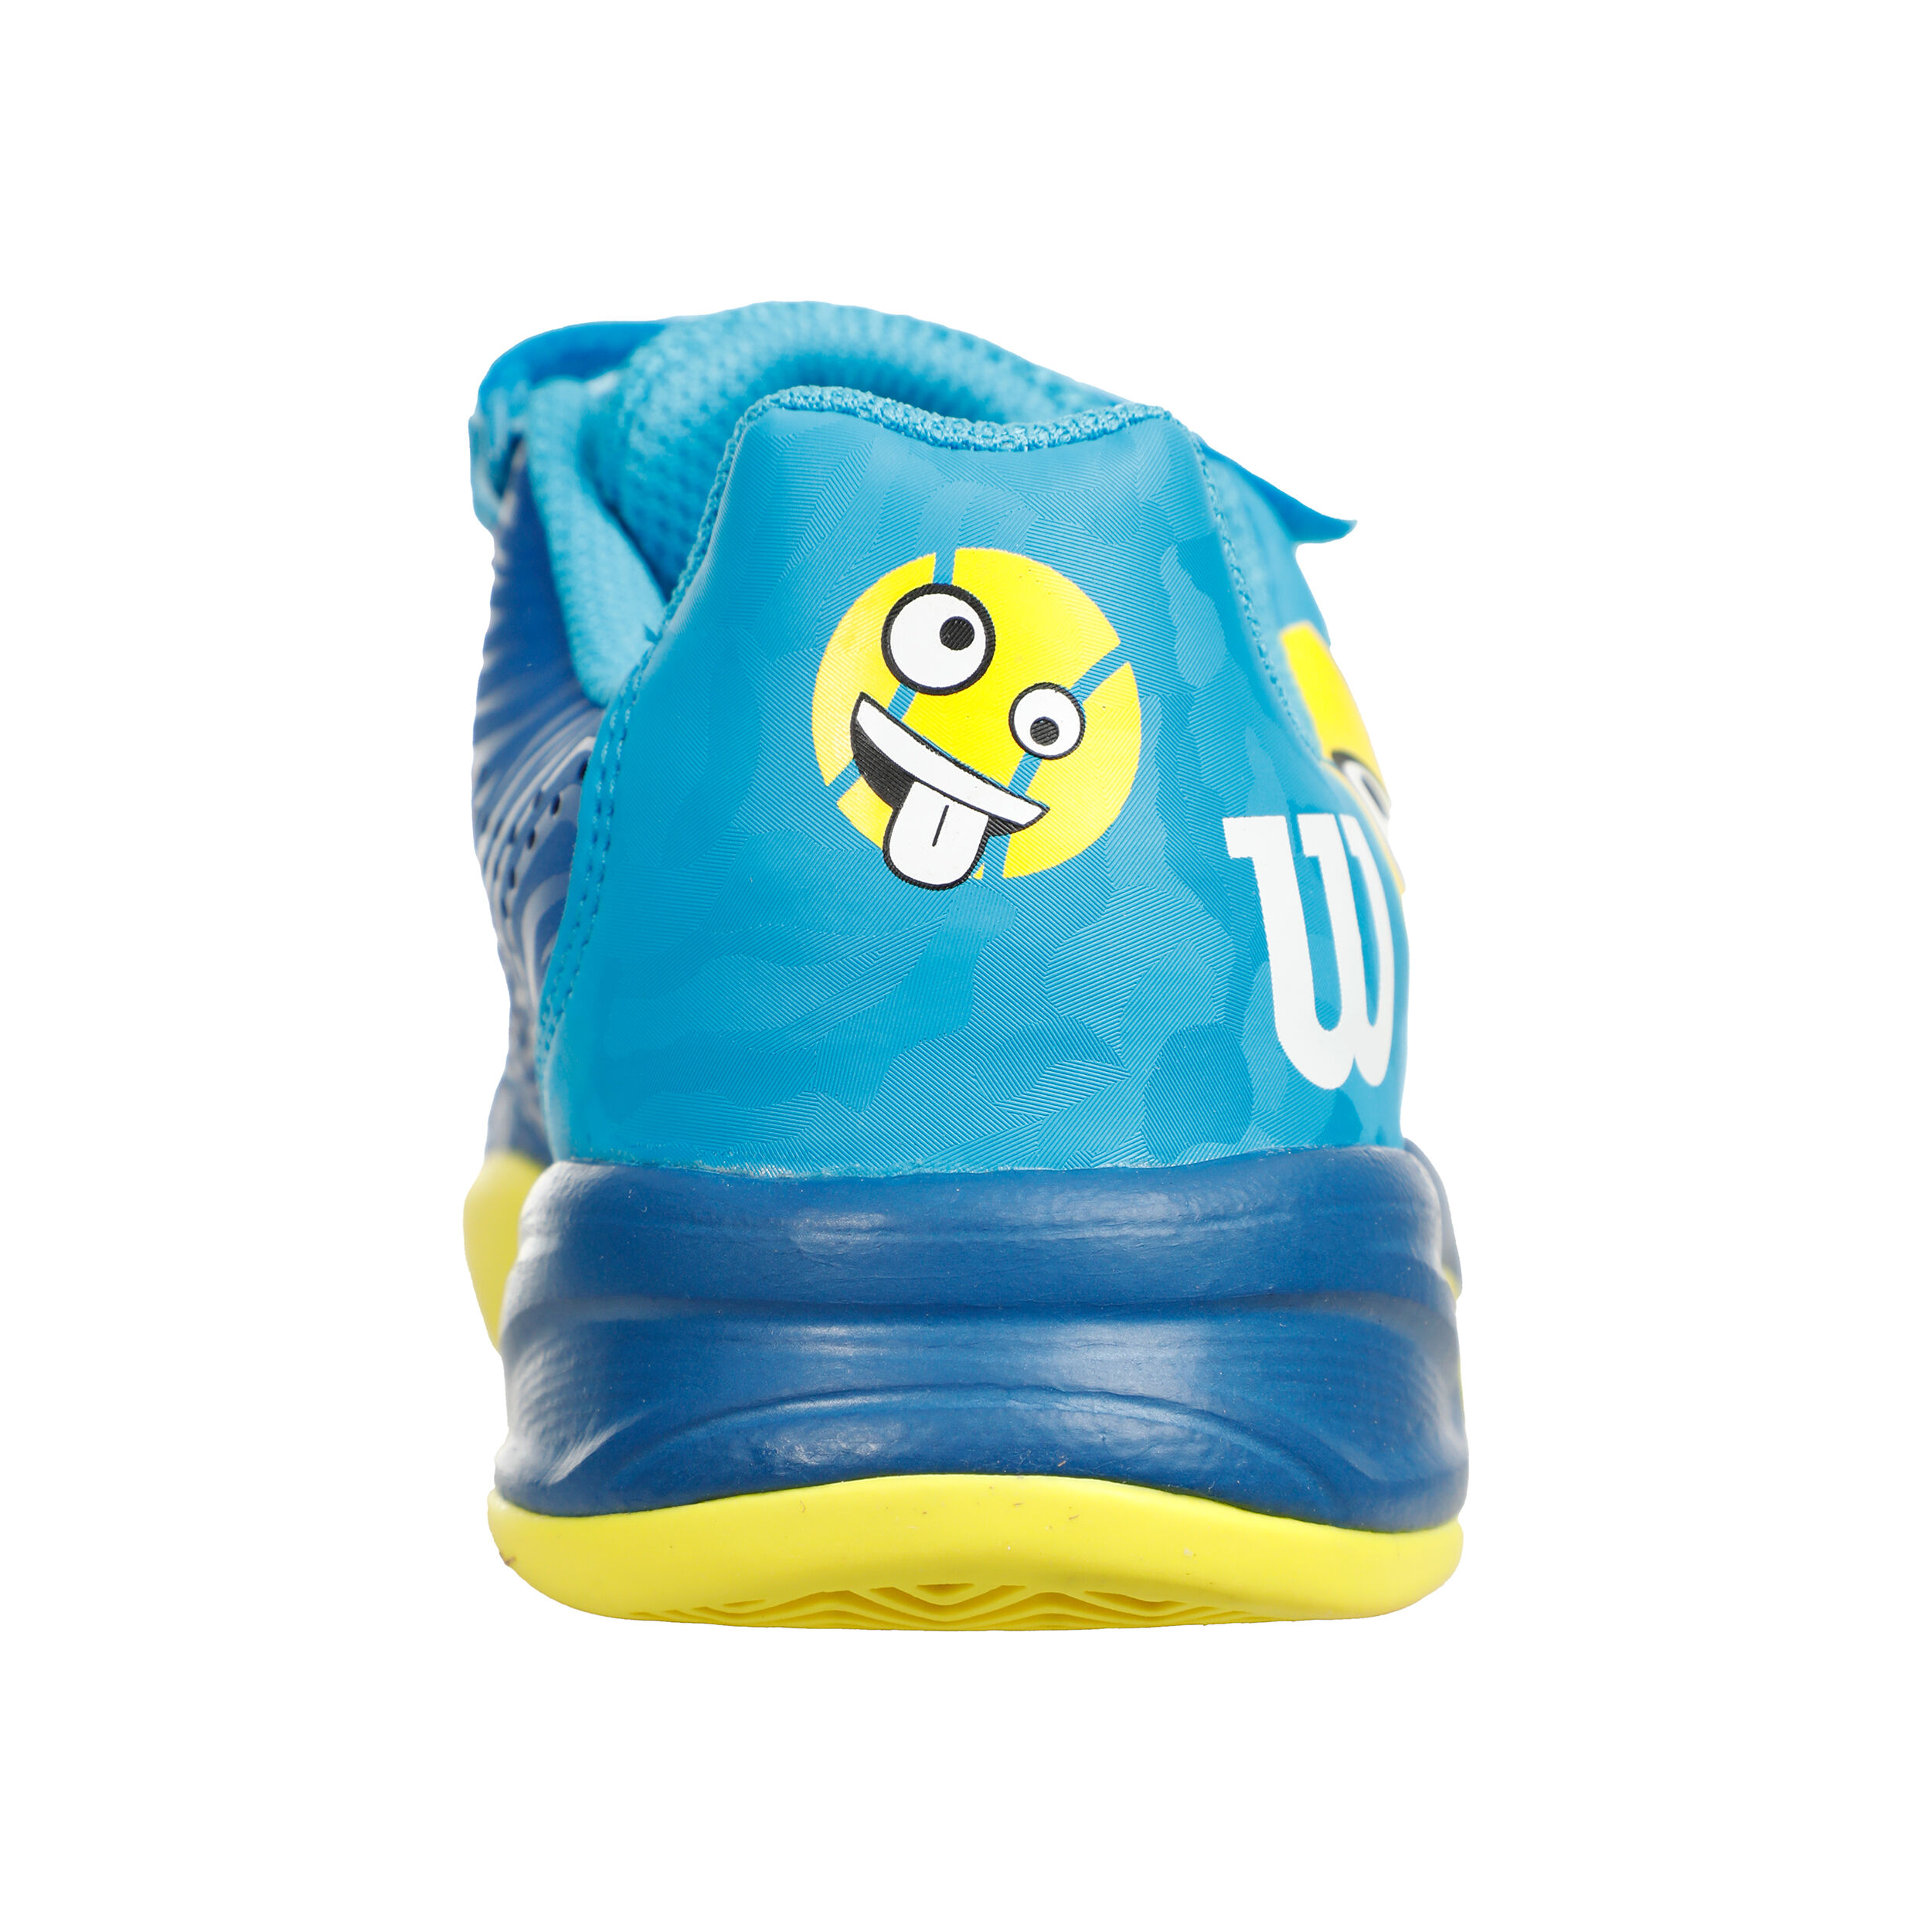 Kaos EMO All Court Shoe Kids - Blue, Yellow